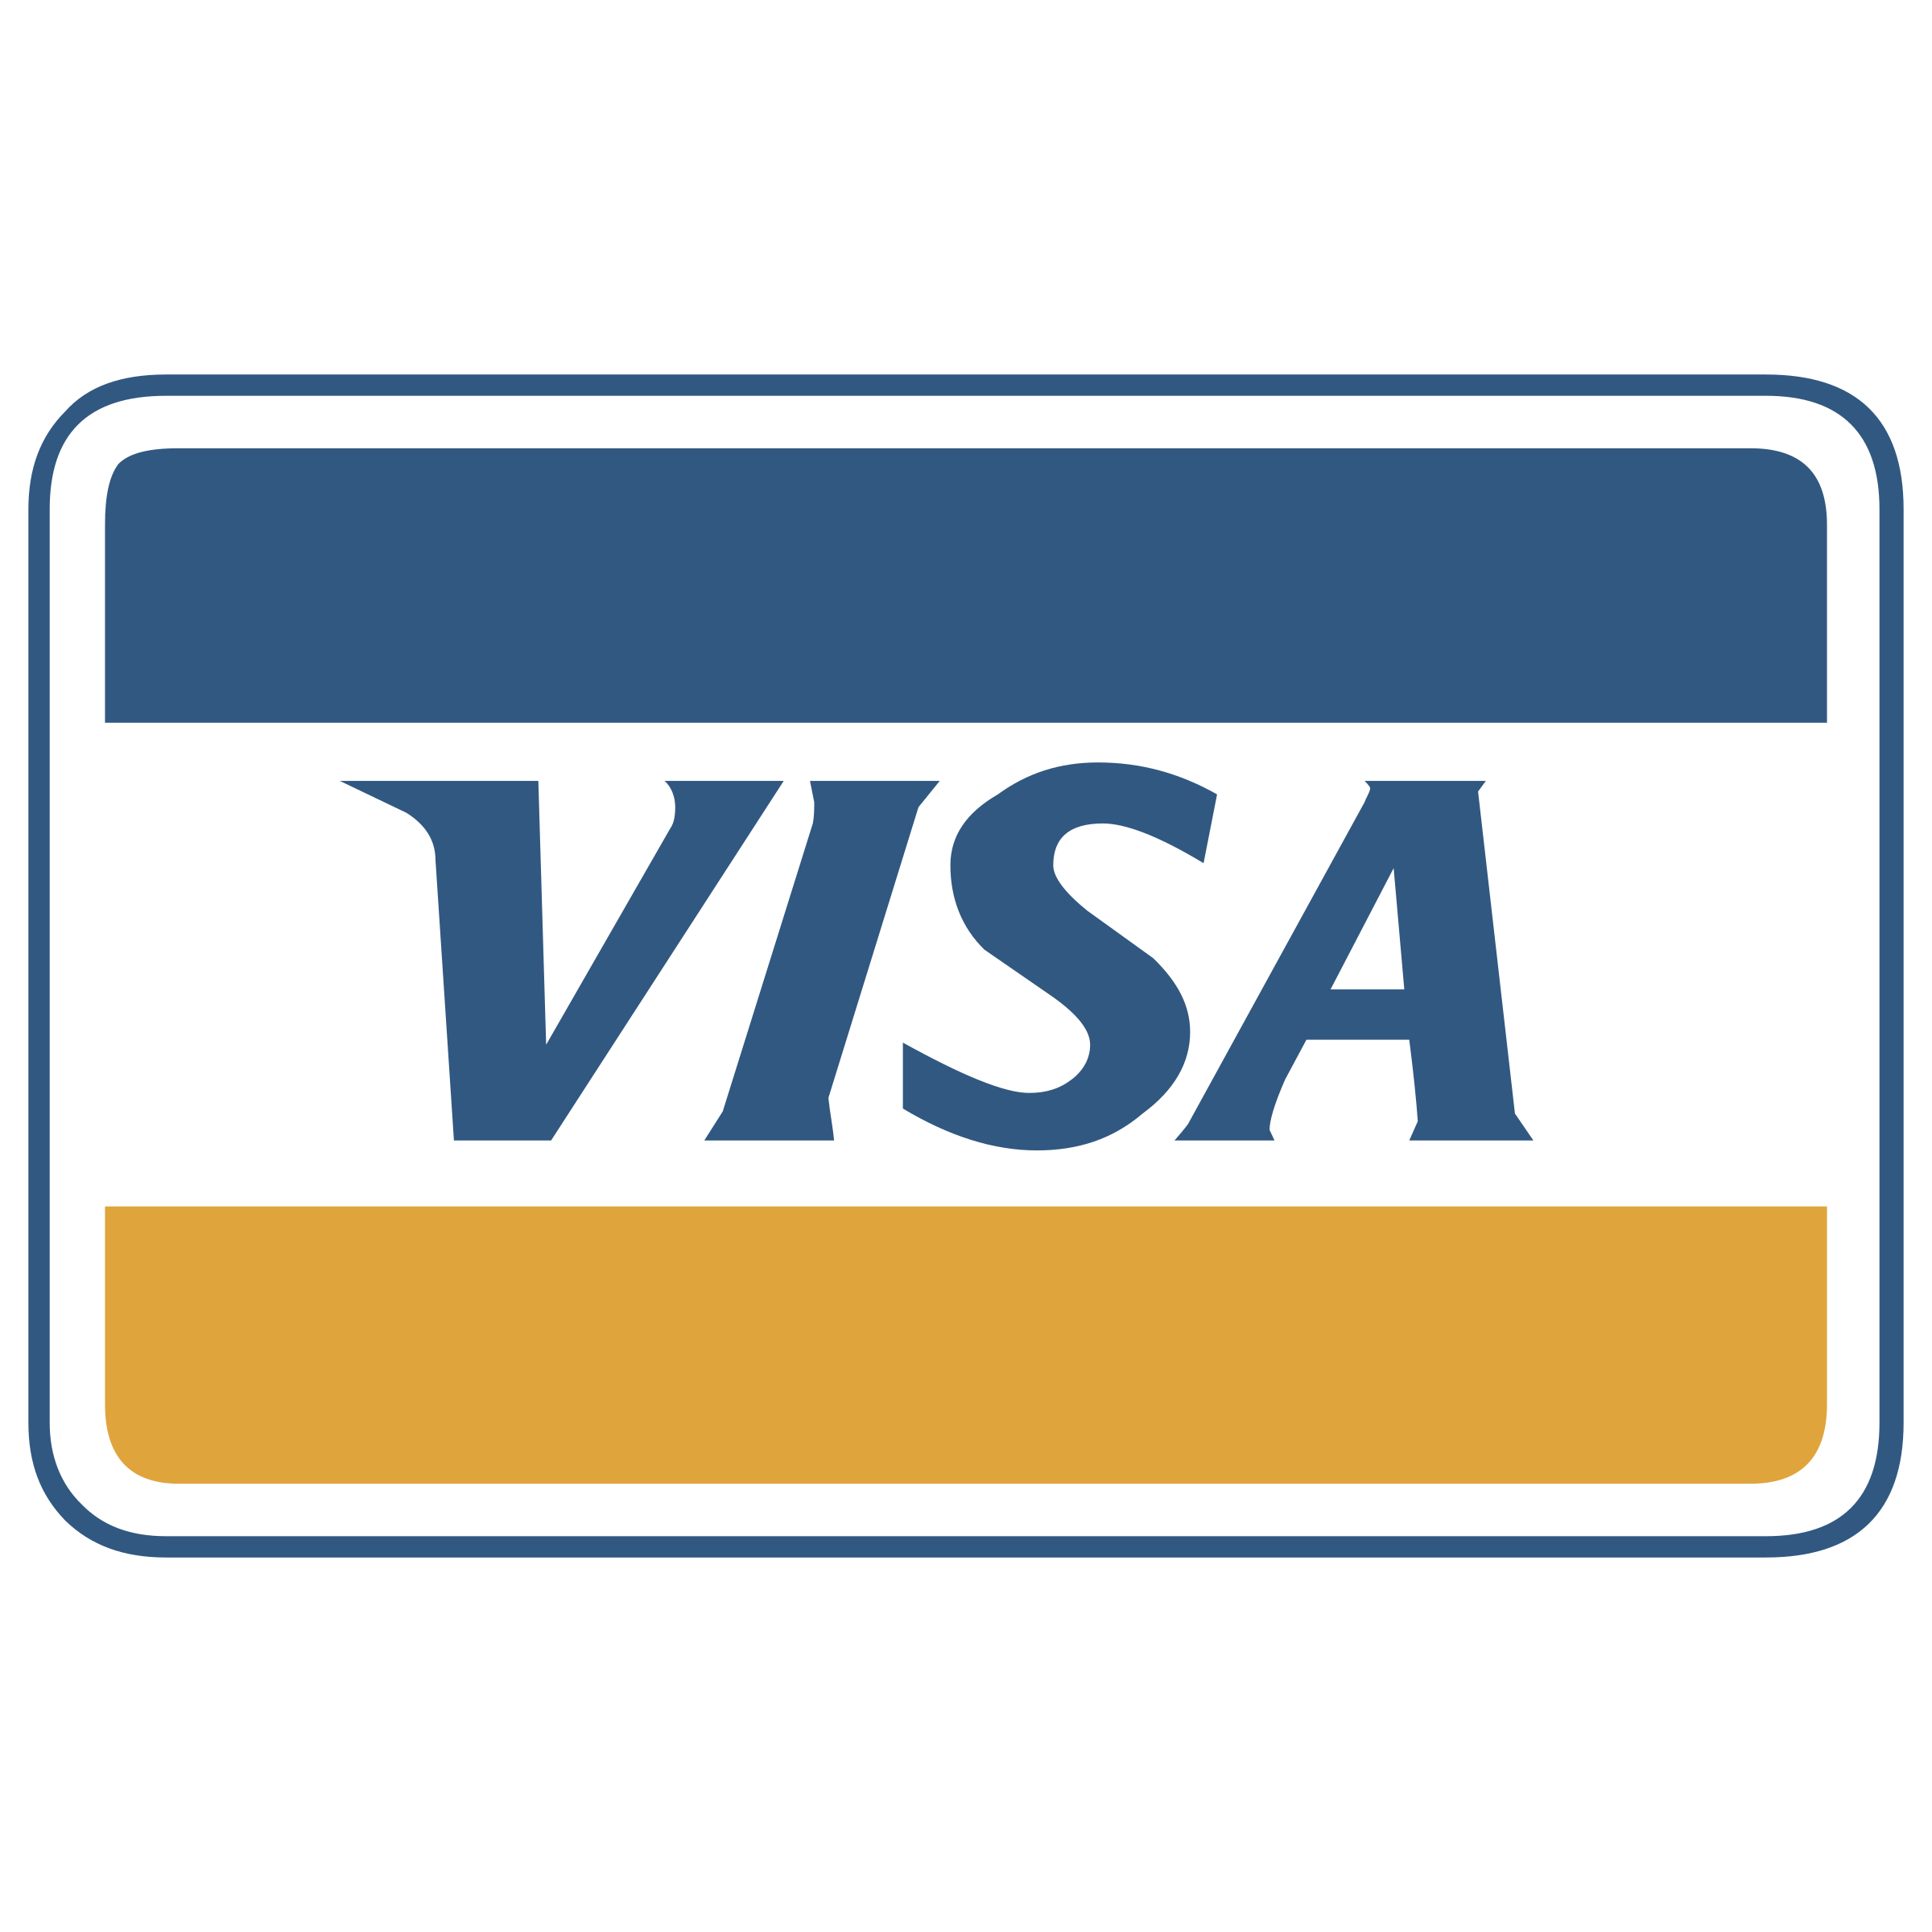 Visa Card Logo PNG Isolated Image